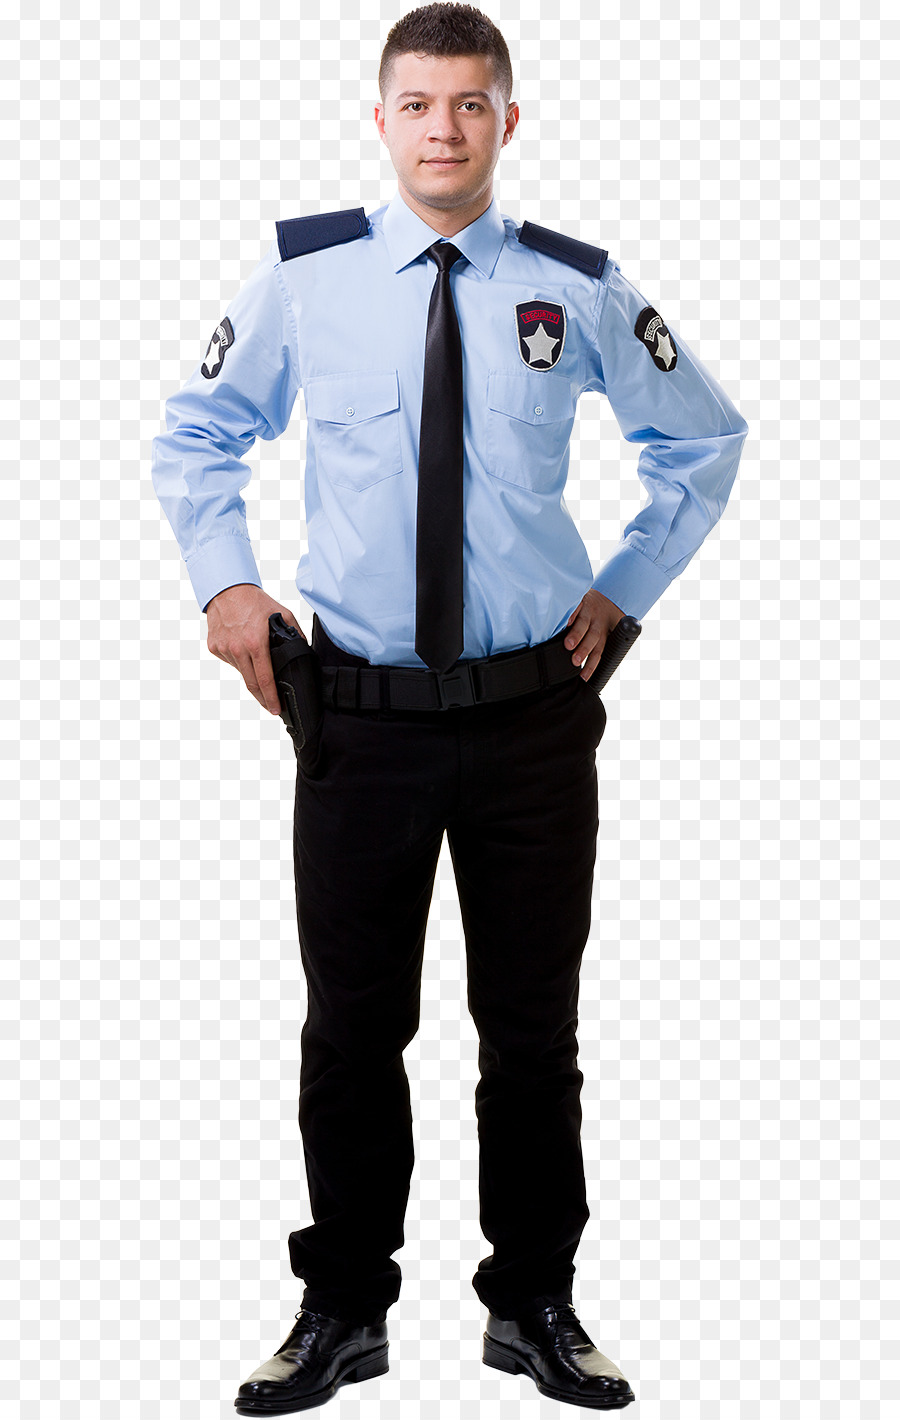 Polizist Wachmann Uniform - Polizei